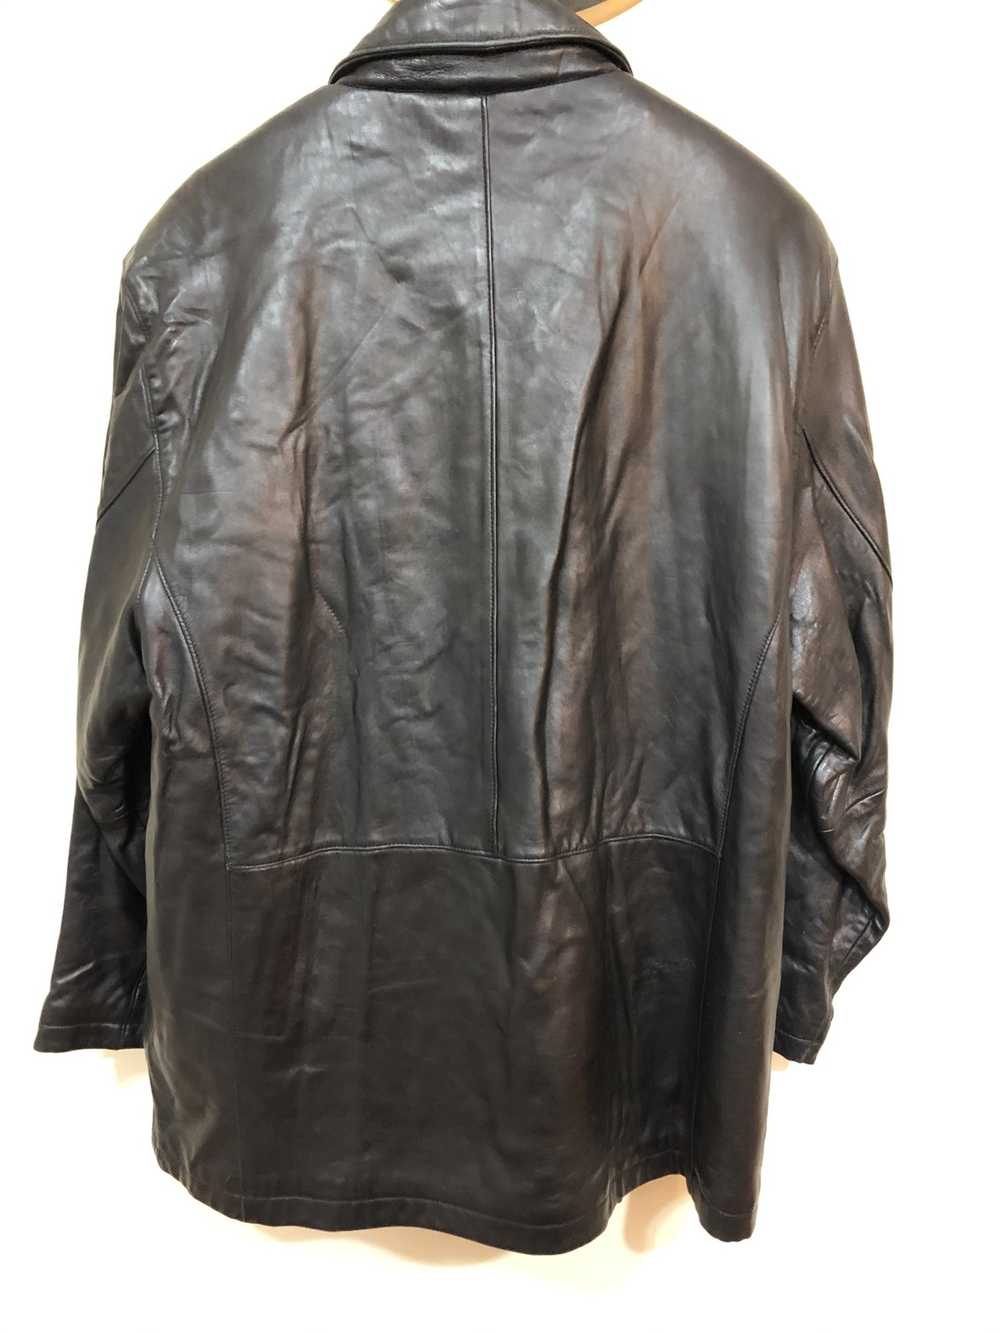 Bachrach Bachrach Black Leather Coat - image 2